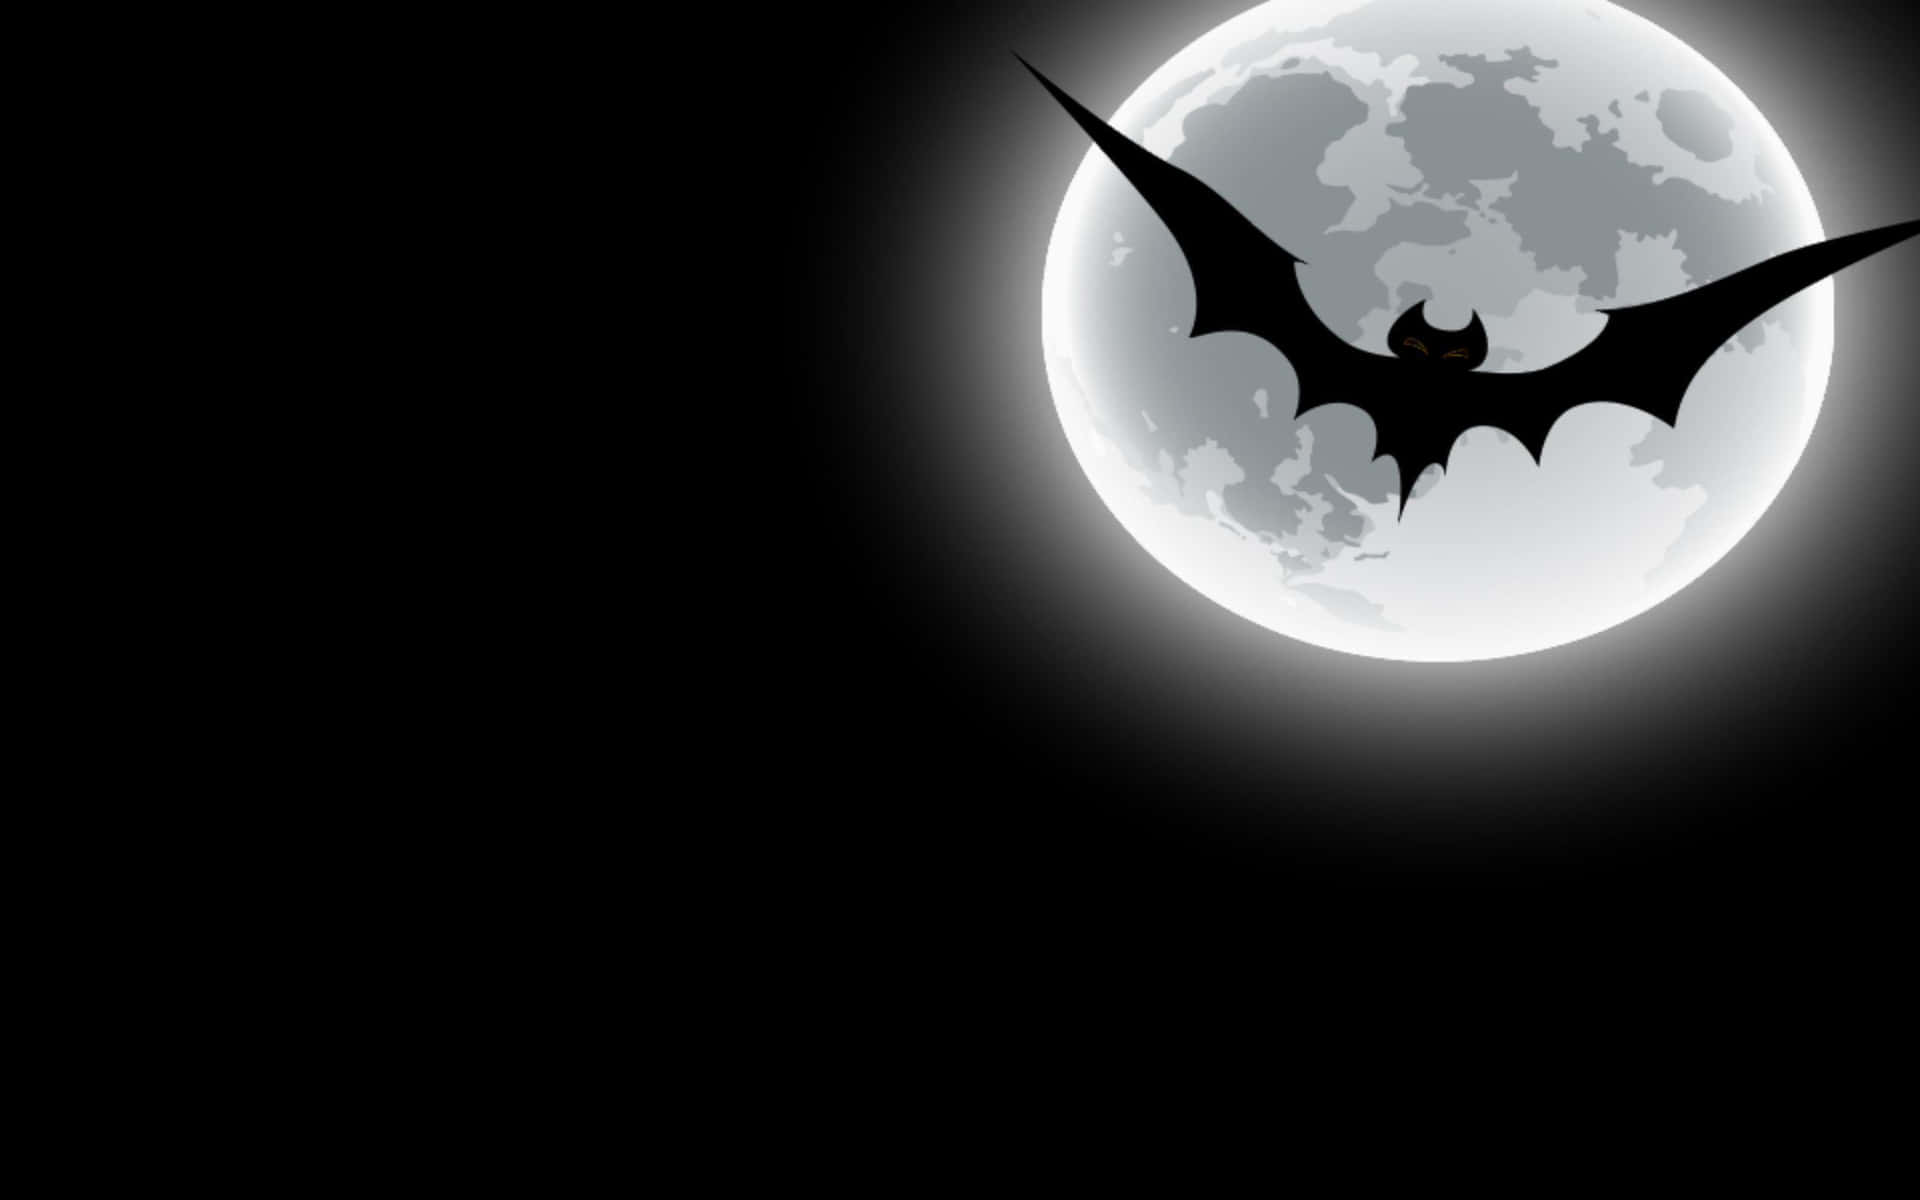 Majestic Bat Soaring in the Night Sky